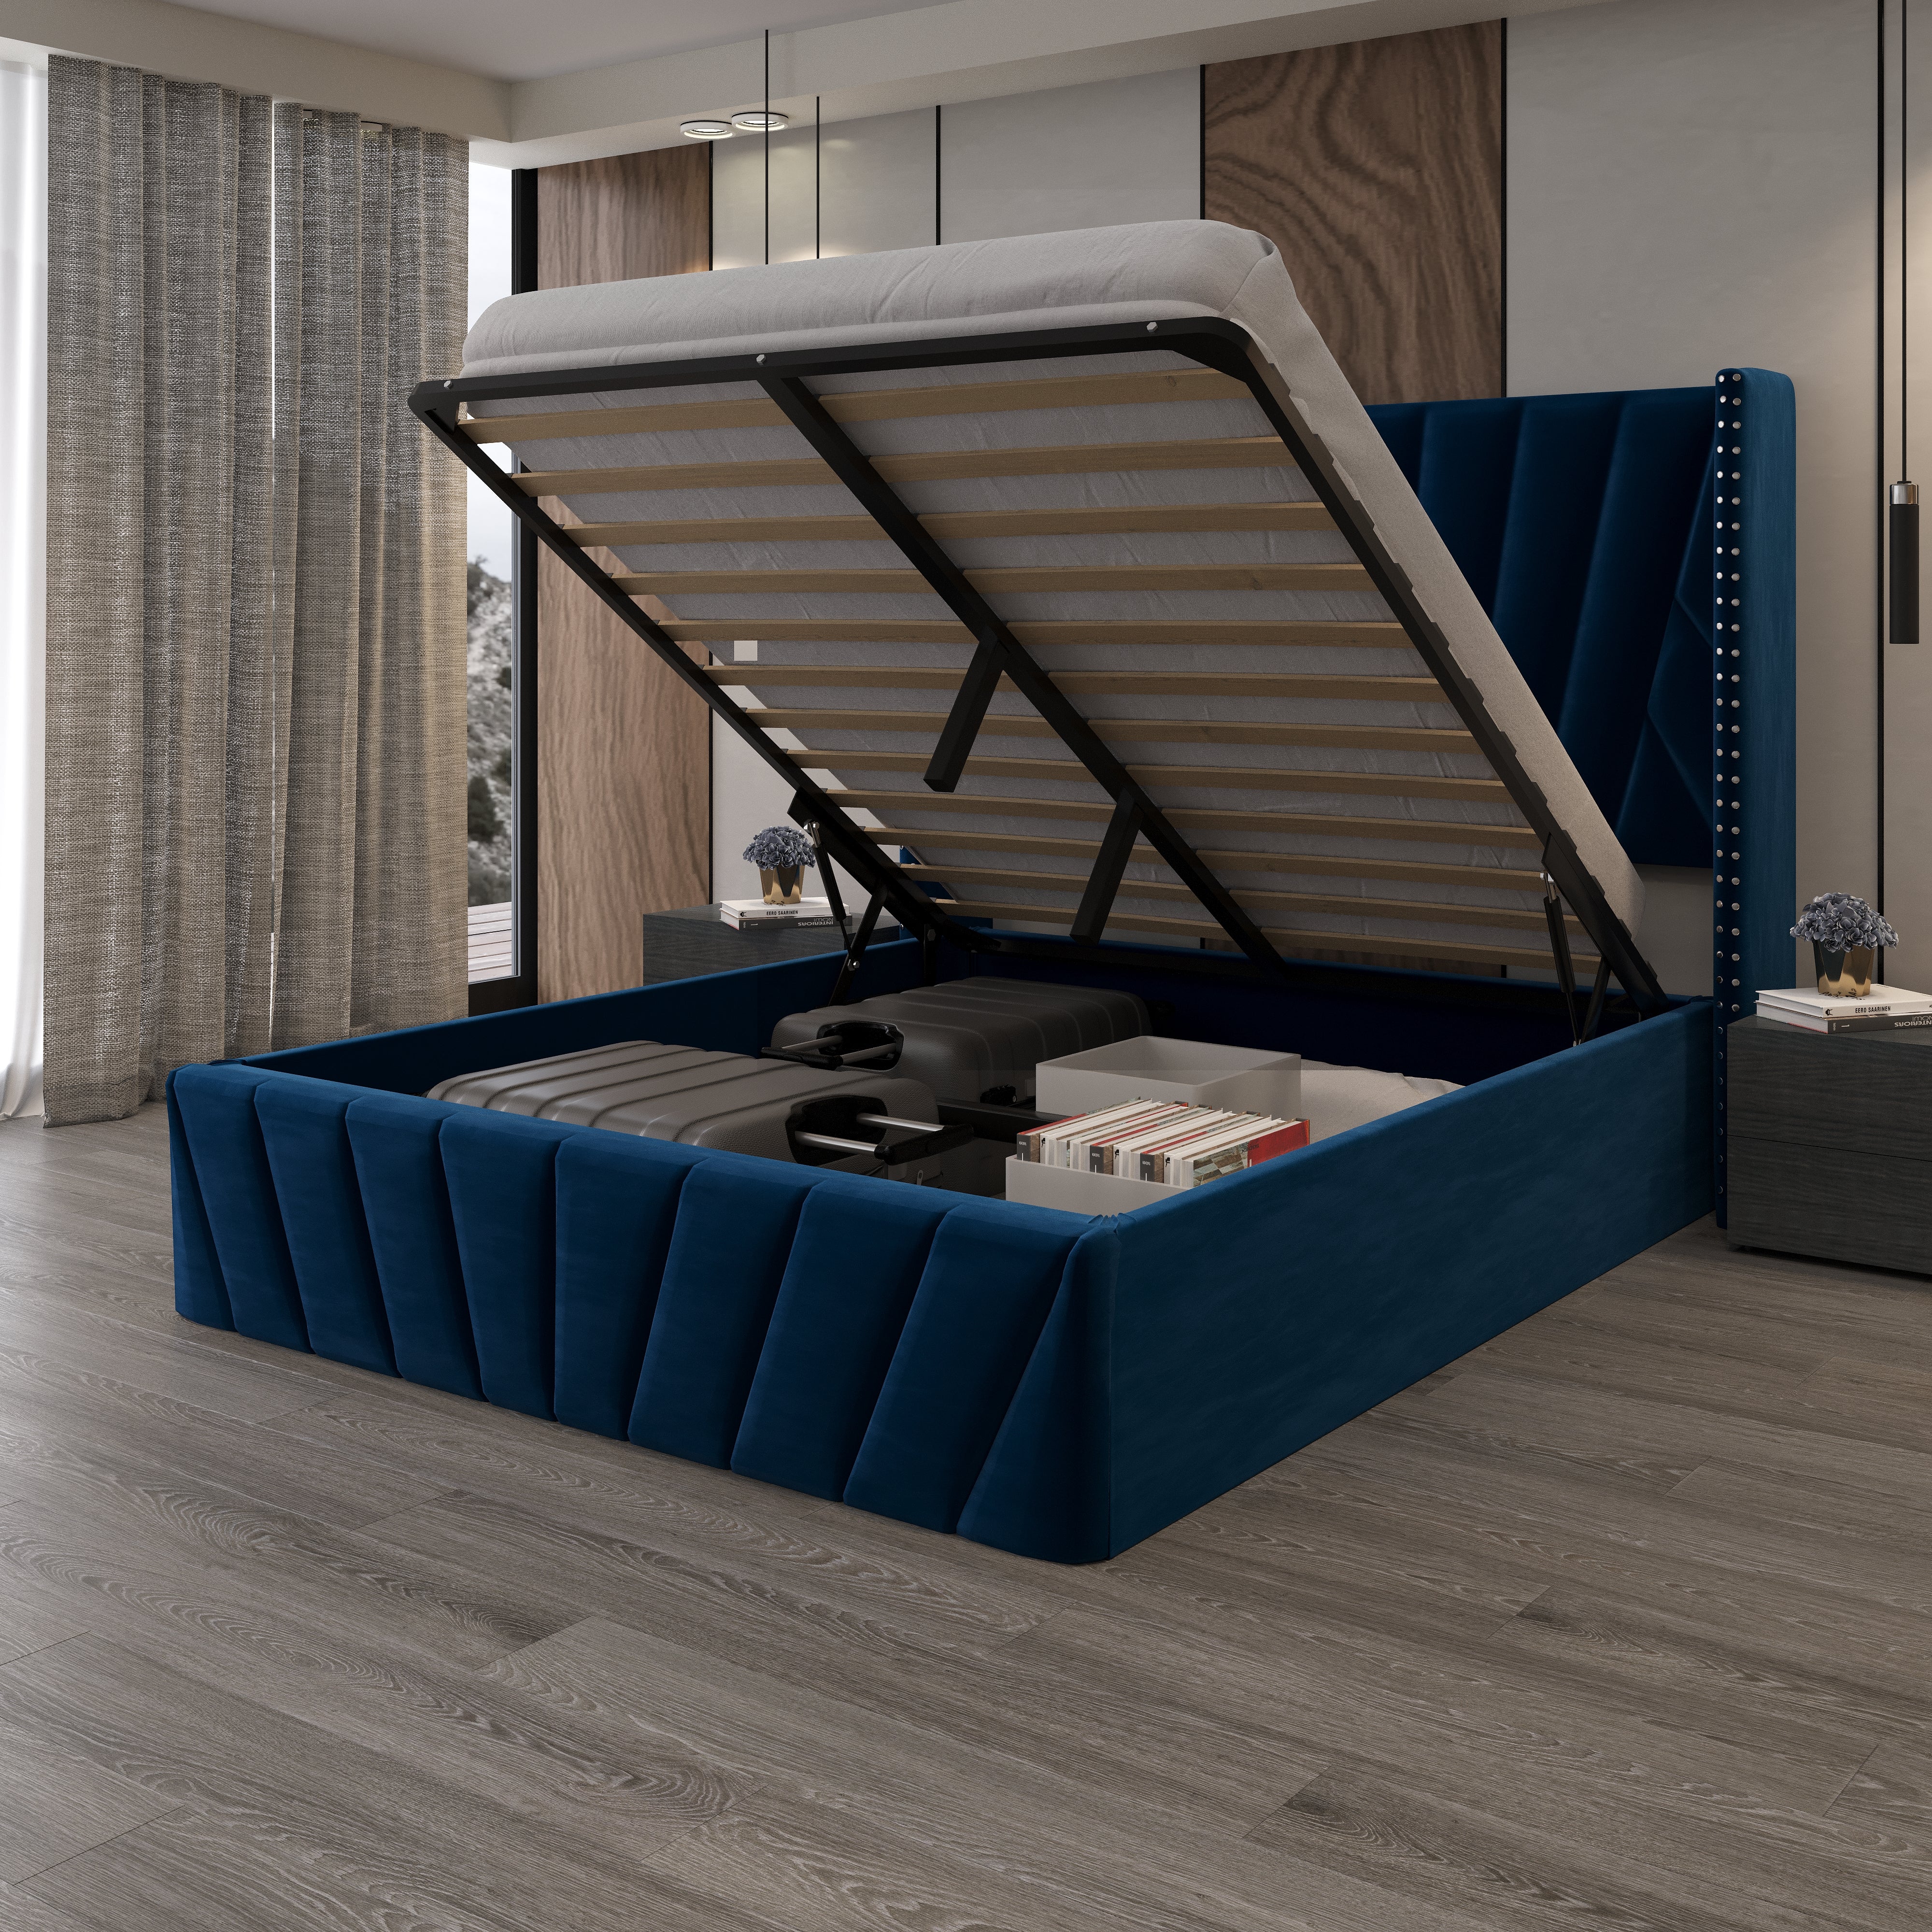 Velets Eva Contemporary Mid-Century Soft Padded Upholstered Platform Storage Bed Frame with Hydraulic Gas Lift Storage - Solid Wood Frame, Wood Slat System & Smart Hydraulic Under-Bed Storage - Blue